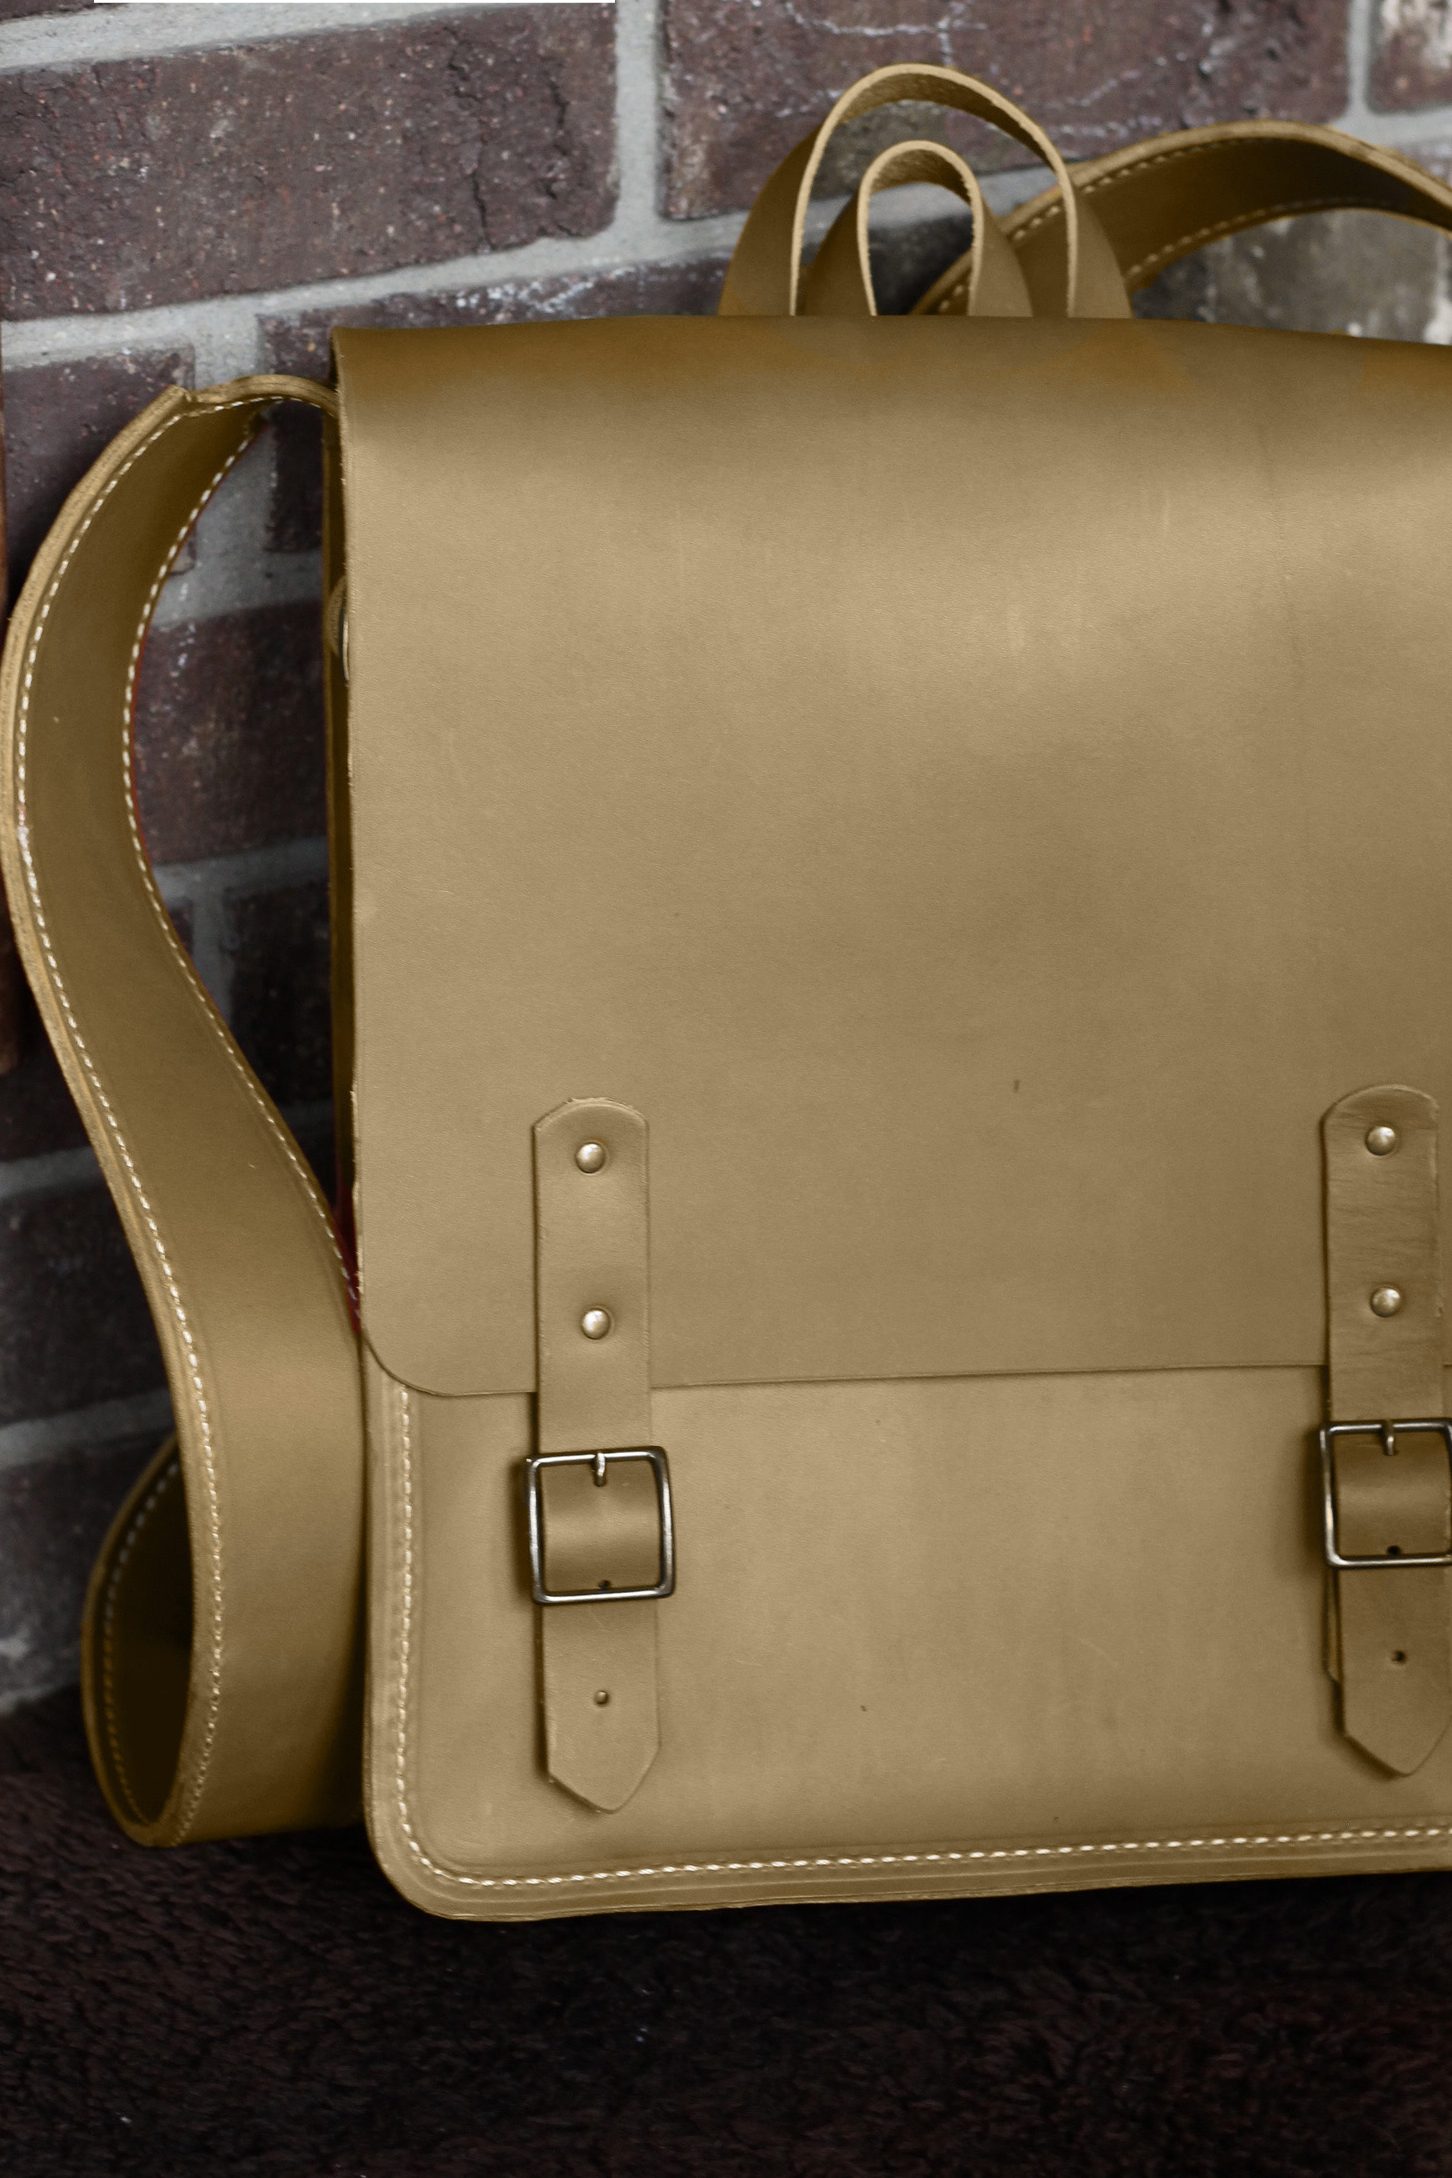 Olive Leather Backpack